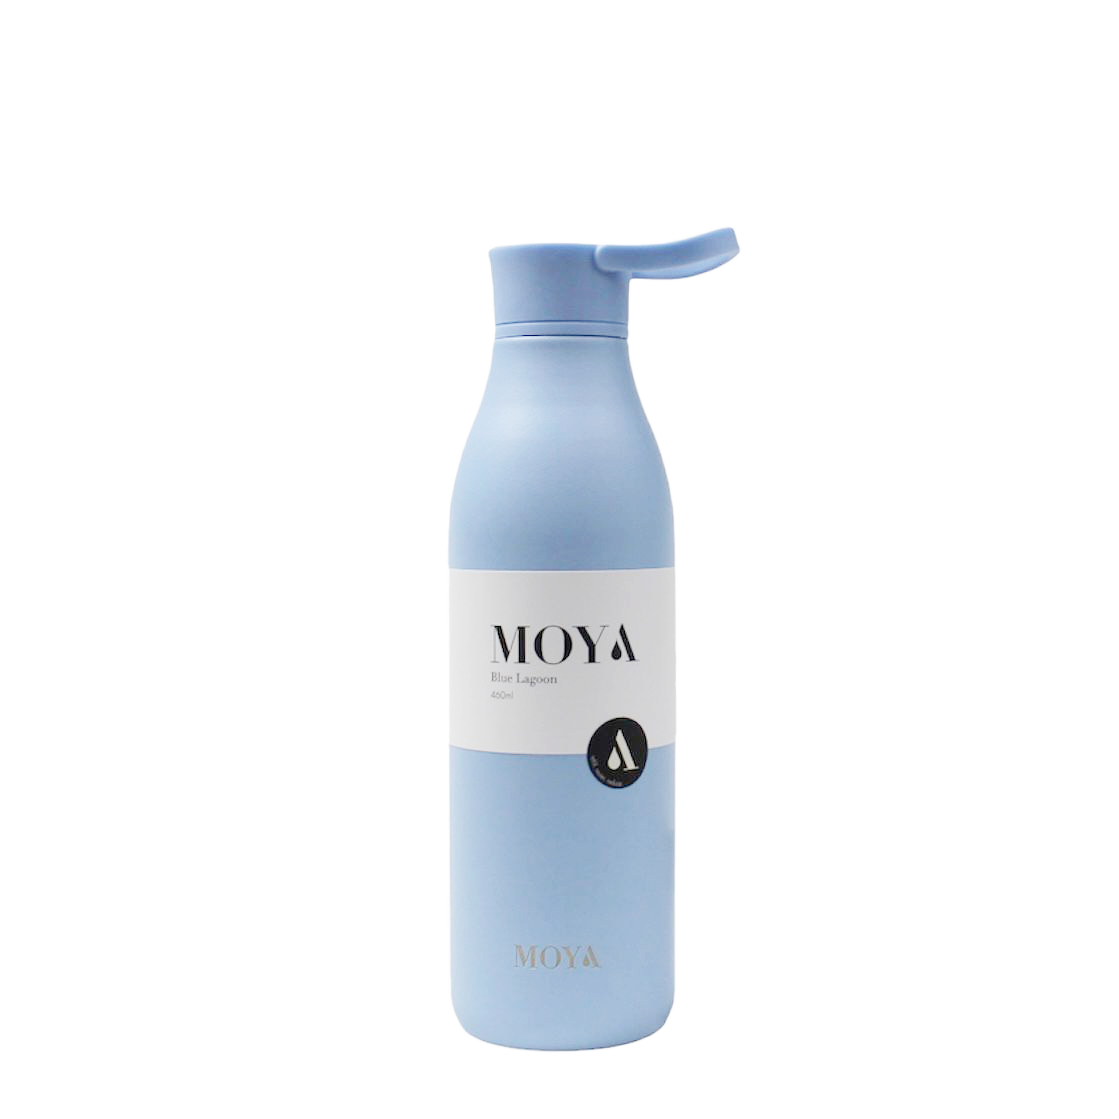 Moya Sustainable “Blue Lagoon” 460ml Powder Blue